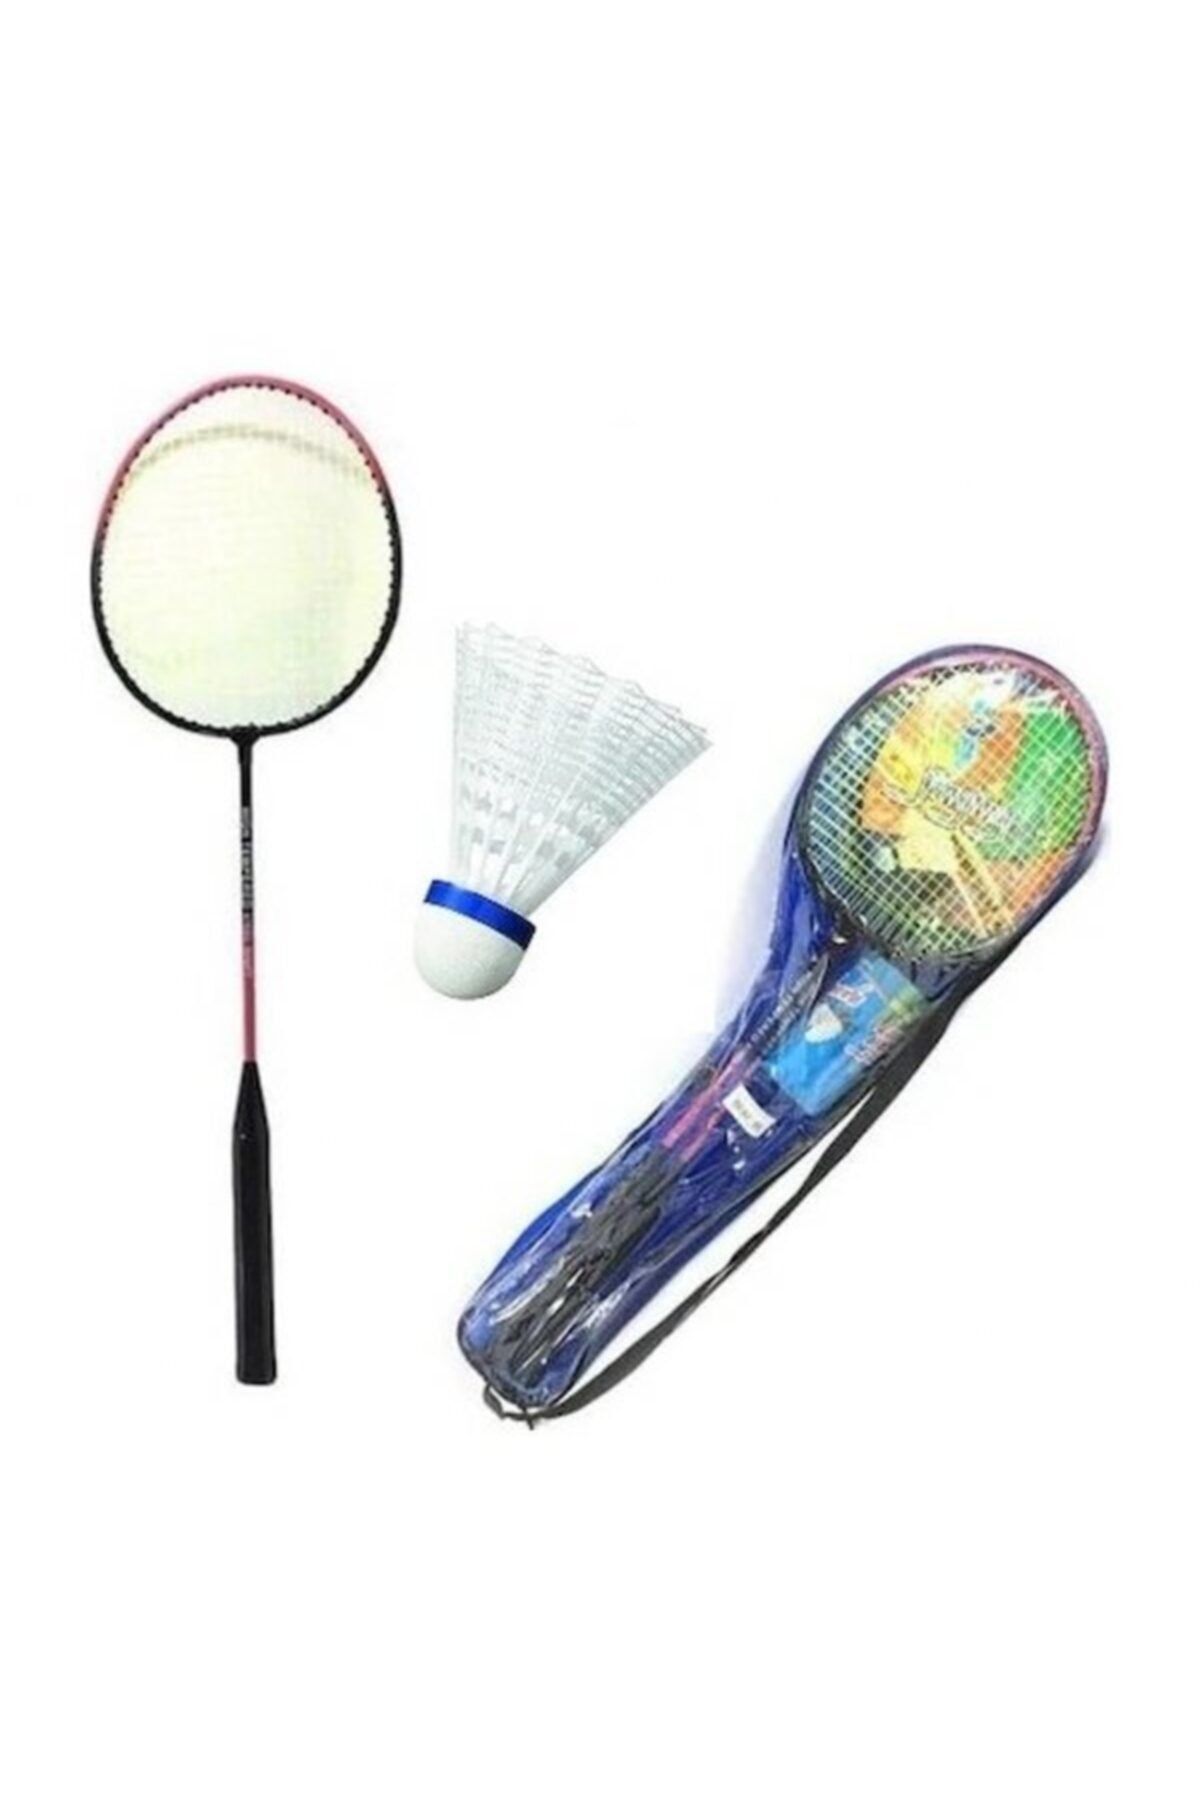 ÖZBEK Badminton Raketi Set 2 Raket 1 Top File Çantalı